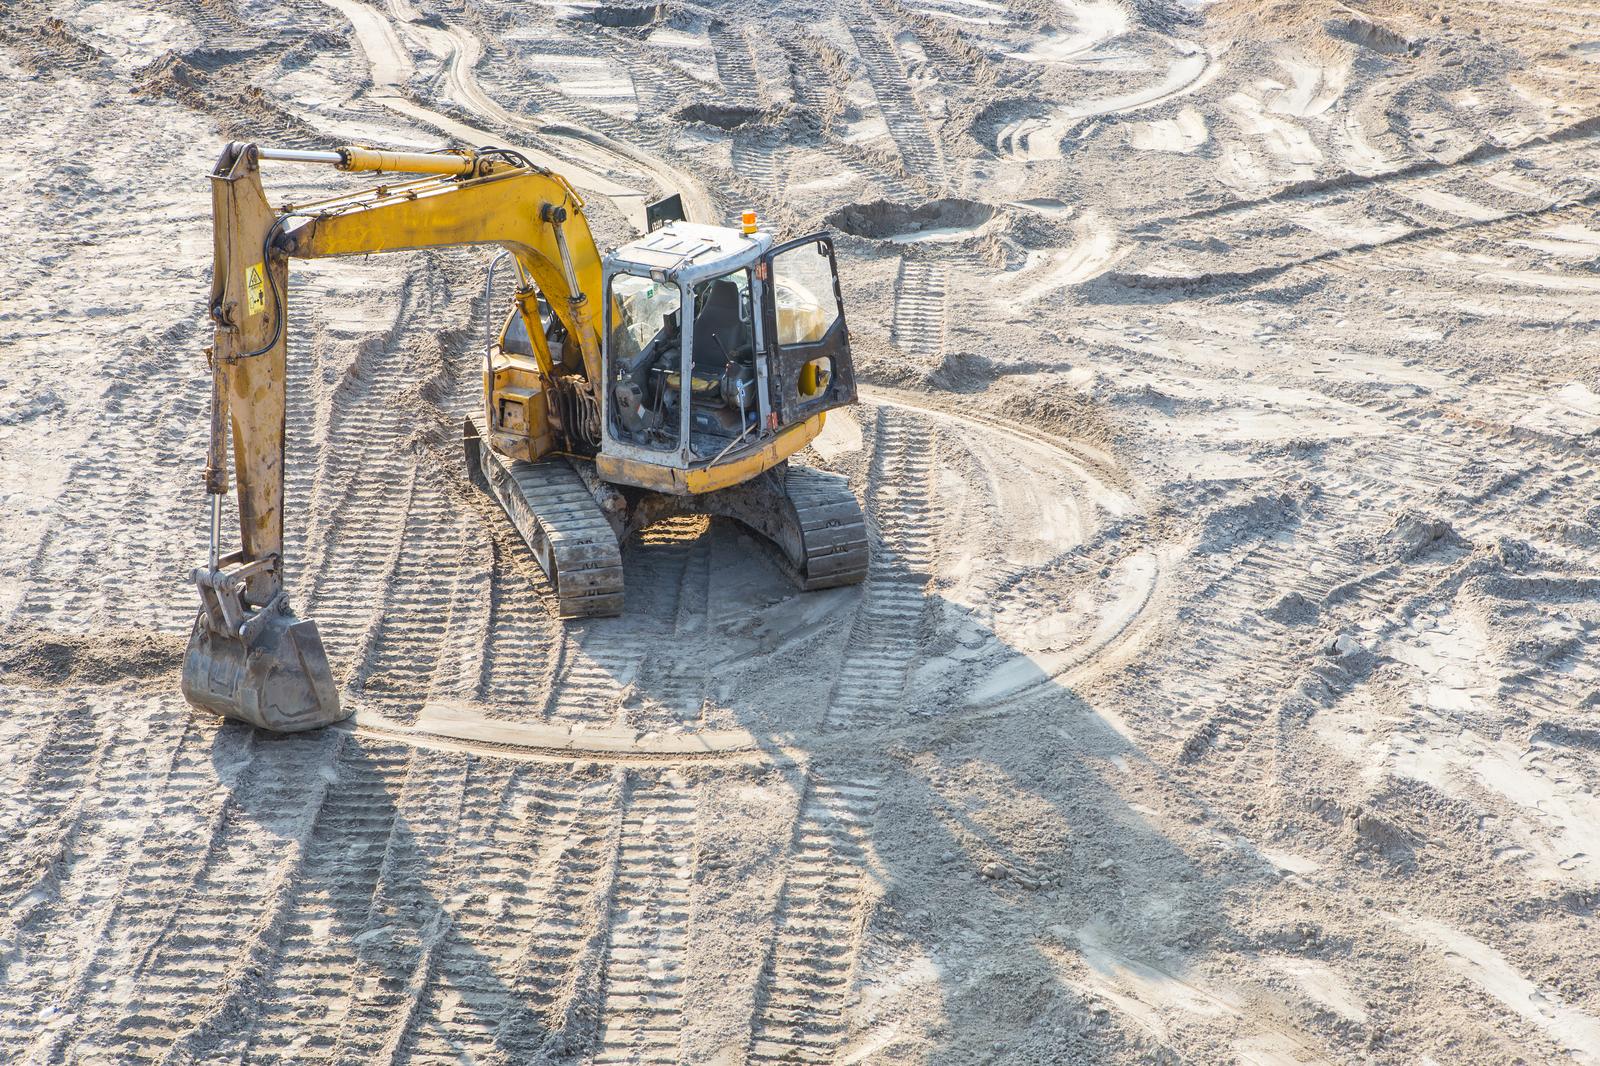 Wholesale of mining, construction and civil engineering machinery in Kohtla-Järve